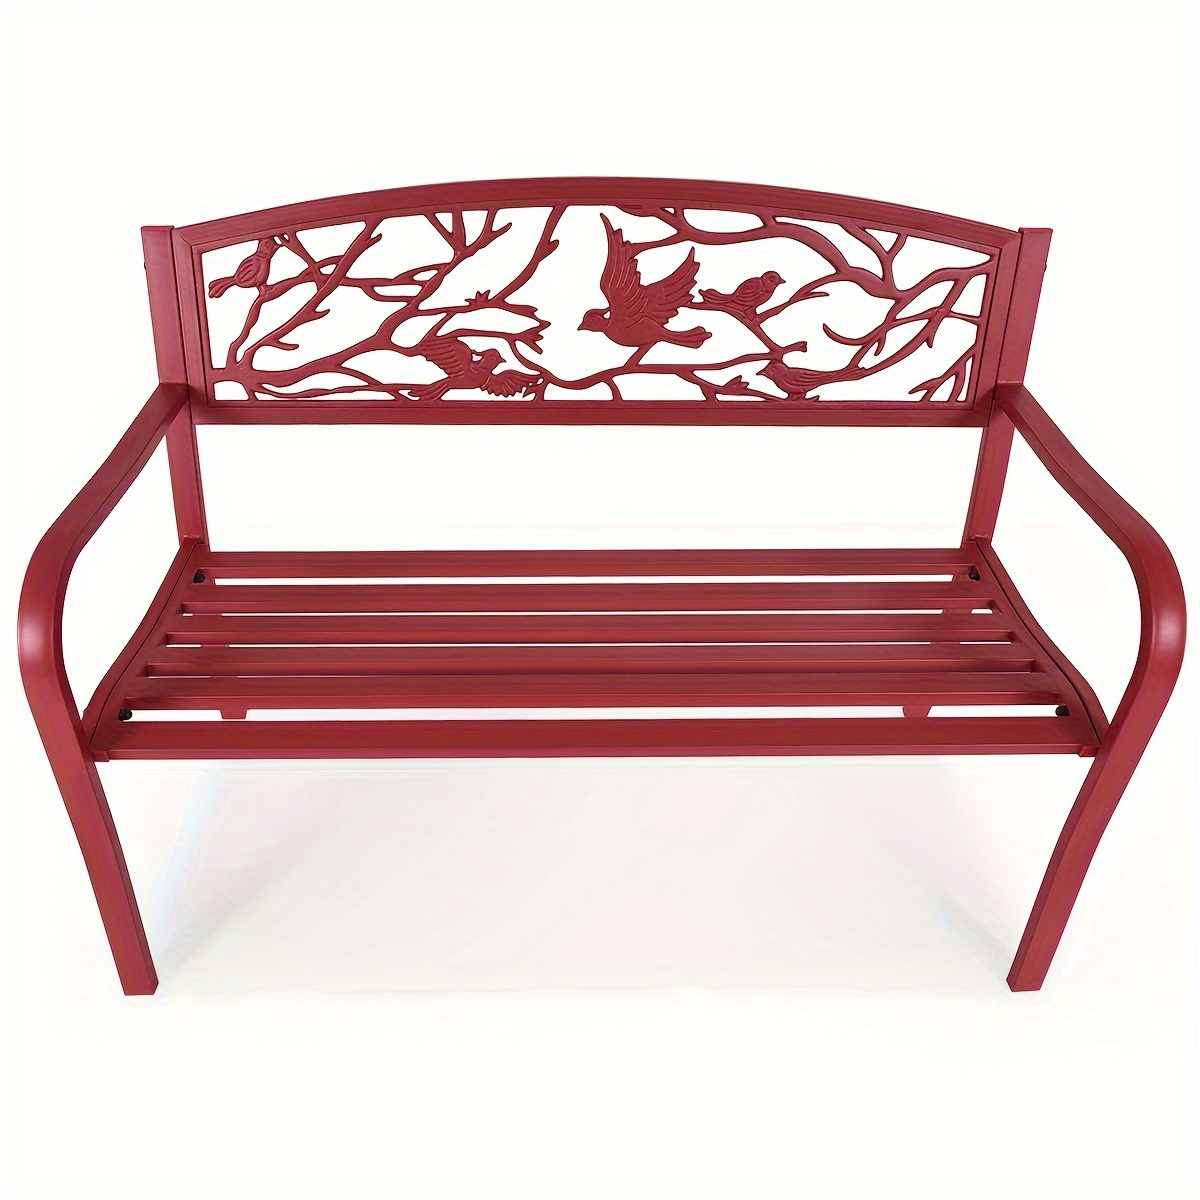 

Patio Garden Bench Park Yard Outdoor Furniture Cast Iron Porch Chair Red